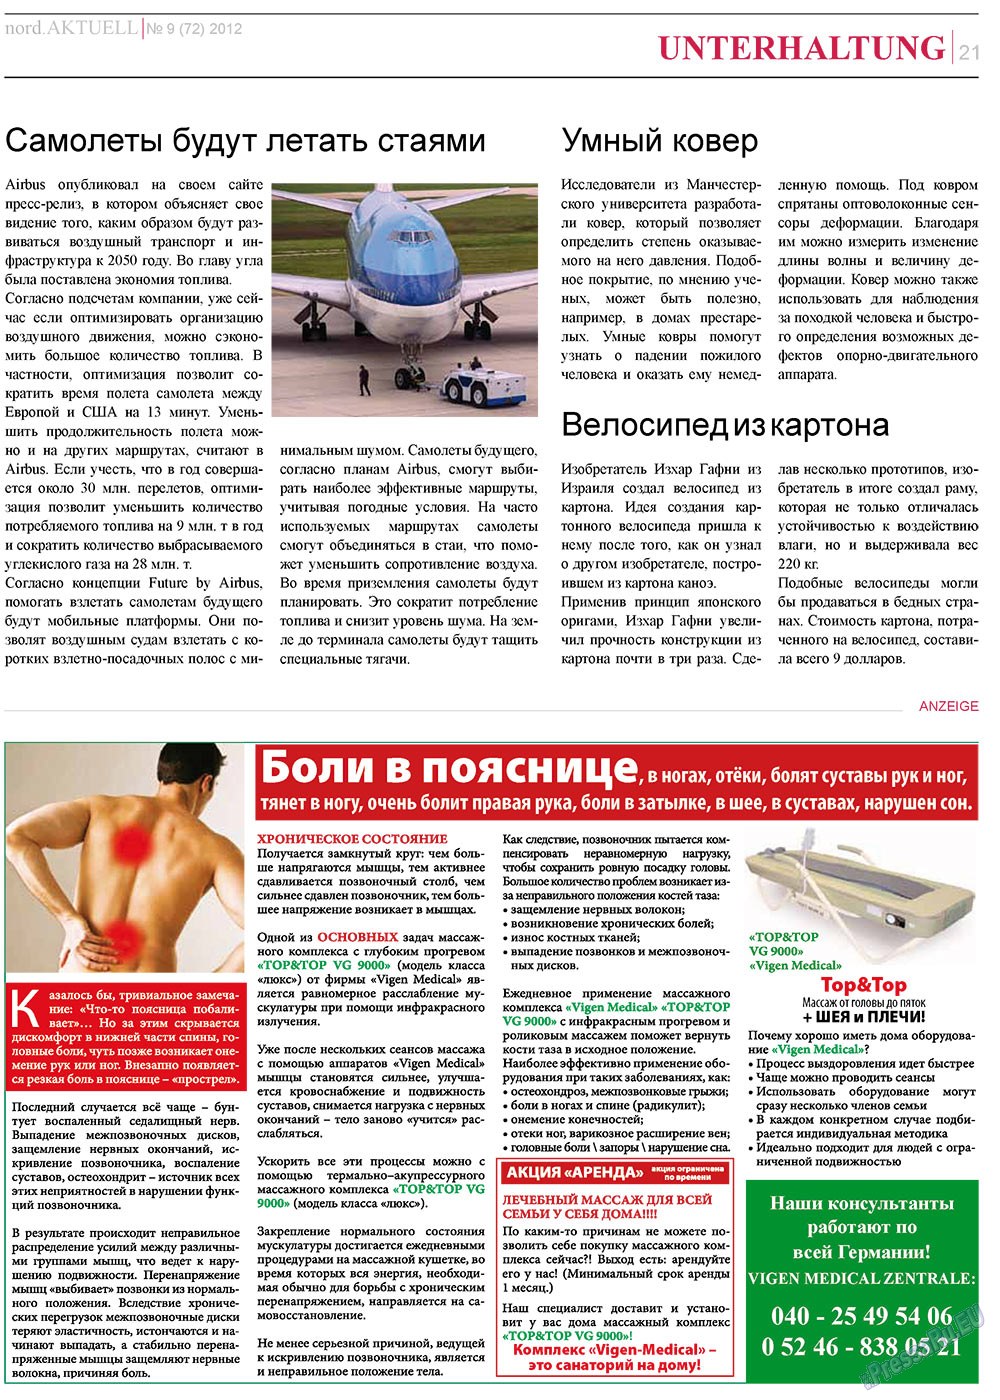 nord.Aktuell, газета. 2012 №9 стр.21